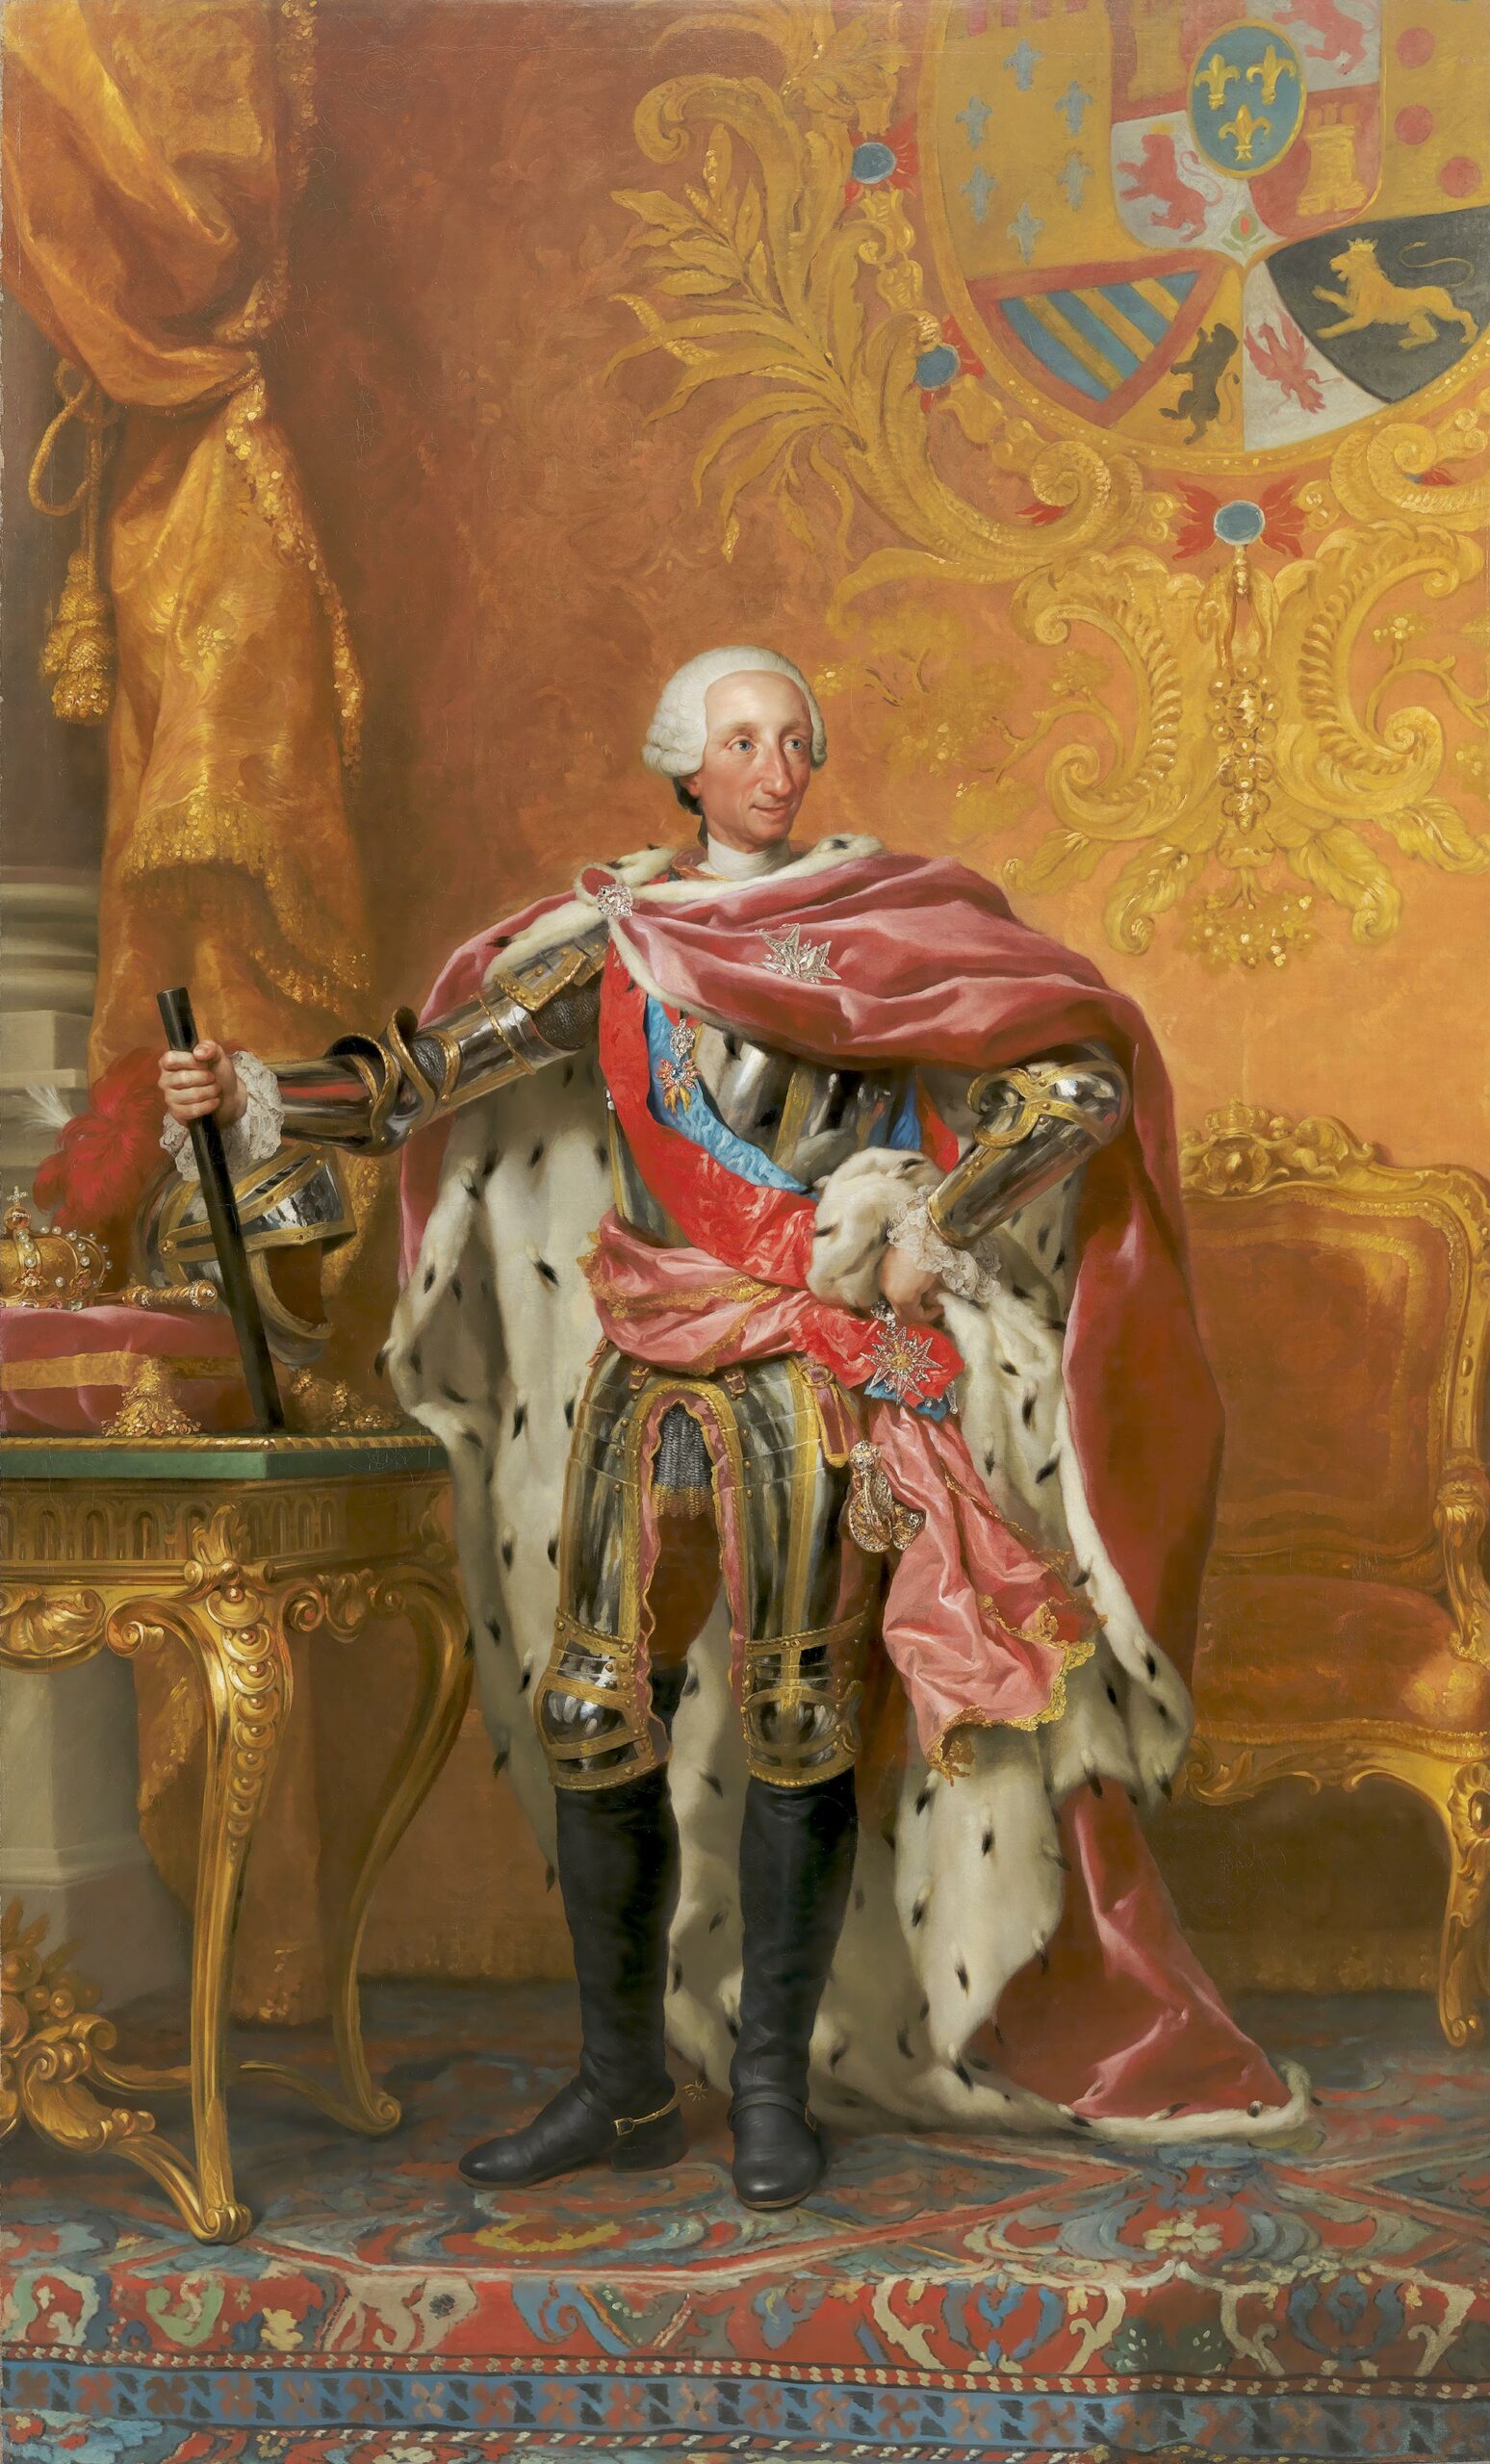 Anton Raphael Mengs, Portrait de Charles III d'Espagne, 1765-66, Statens Museum for Kunst